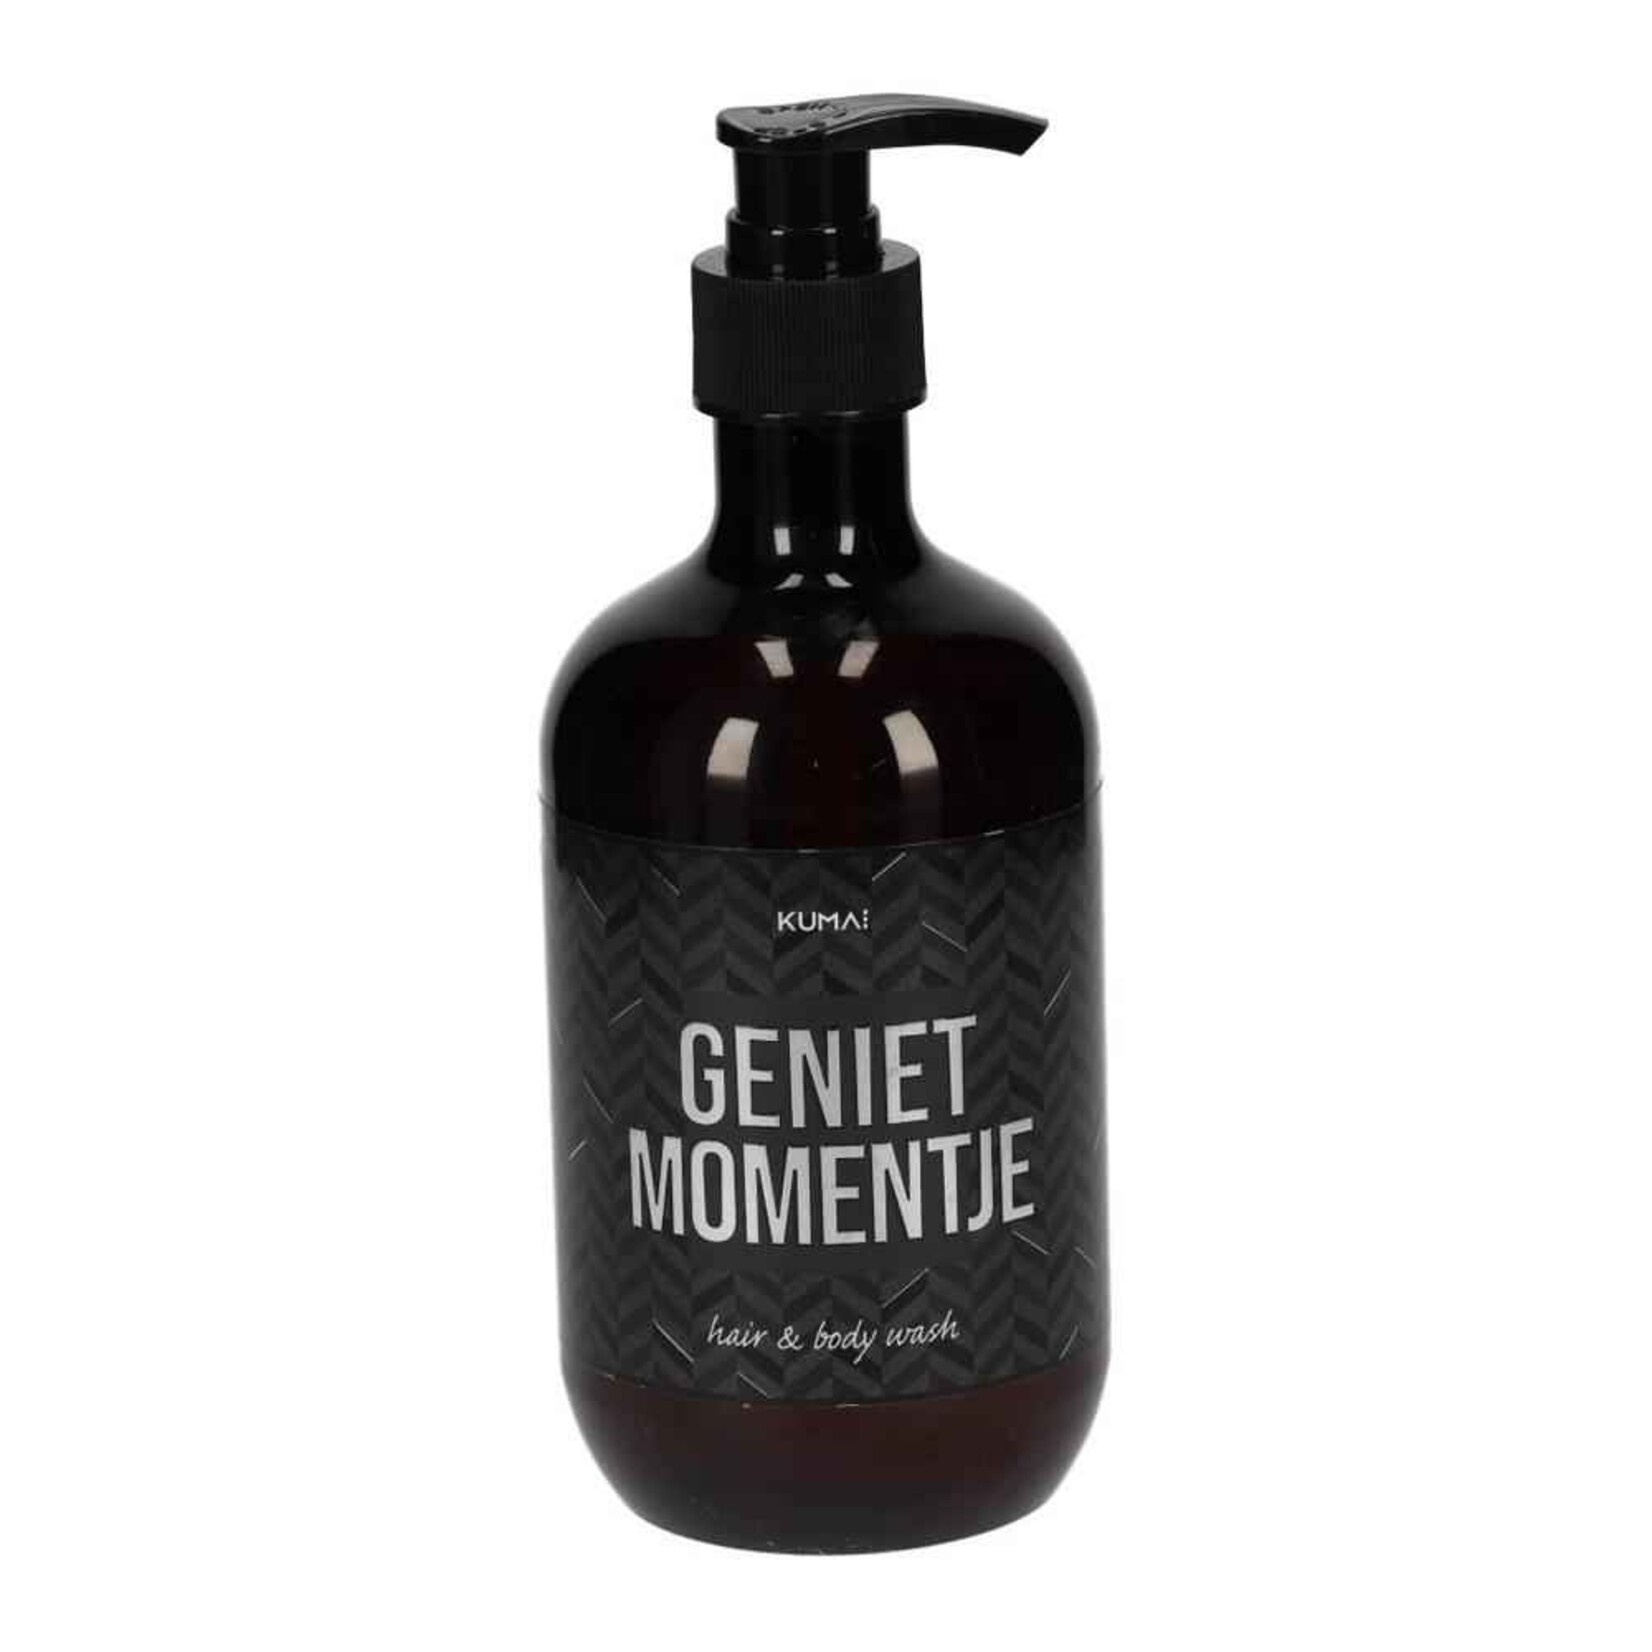 Hair & Body Wash - "Geniet momentje" - 475ml